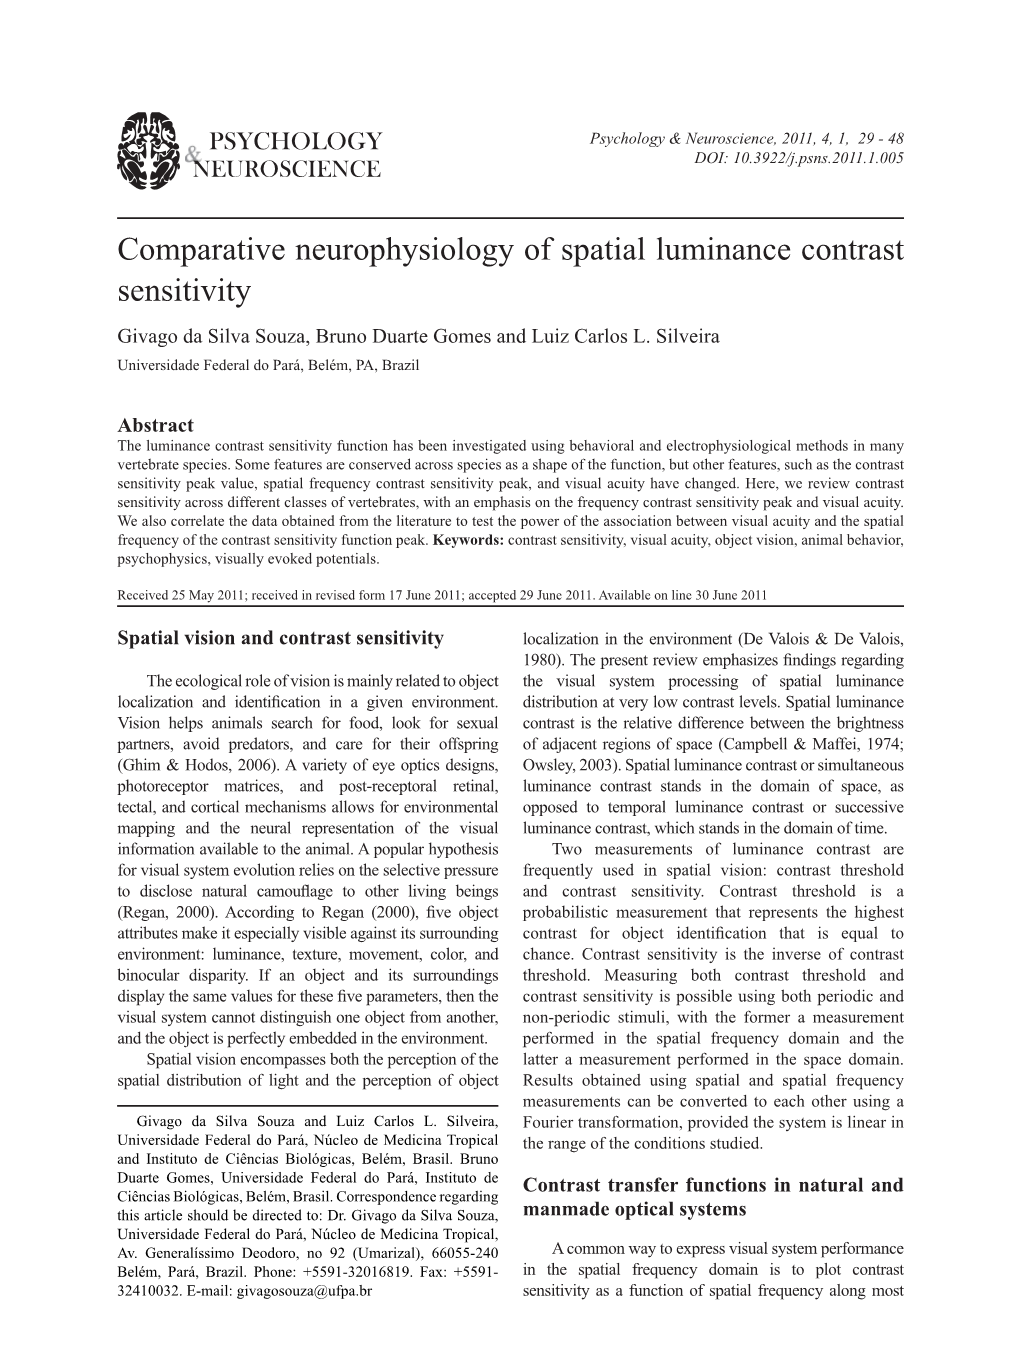 Comparative Neurophysiology of Spatial Luminance Contrast Sensitivity Givago Da Silva Souza, Bruno Duarte Gomes and Luiz Carlos L